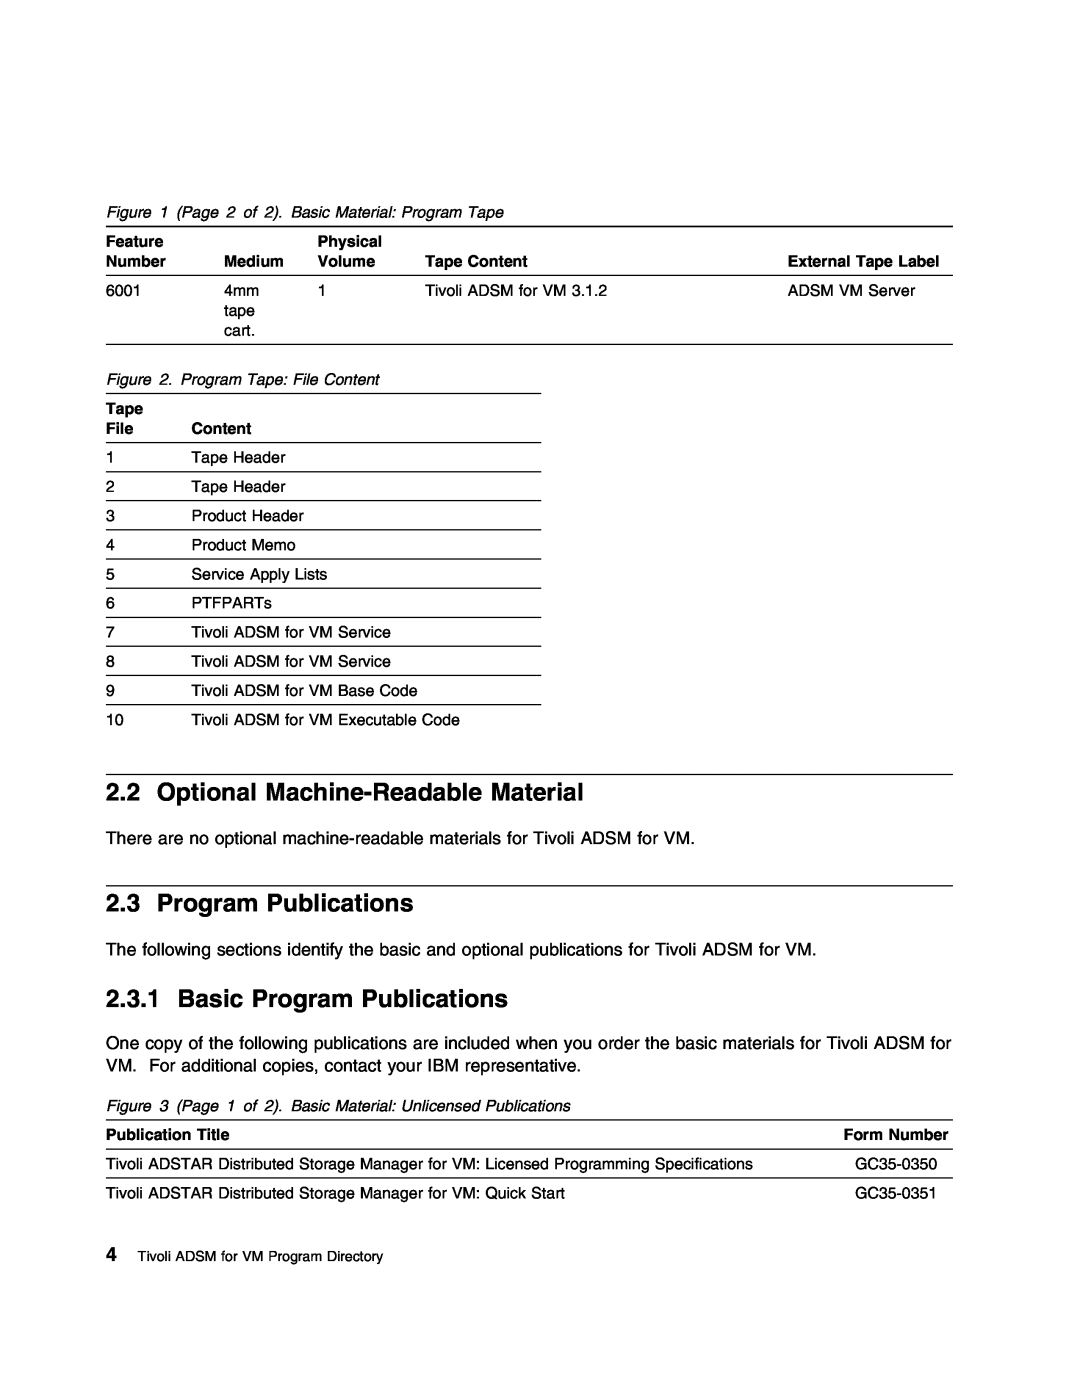 IBM 5697-VM3 Optional Machine-Readable Material, Basic Program Publications, Page 2 of 2. Basic Material Program Tape 